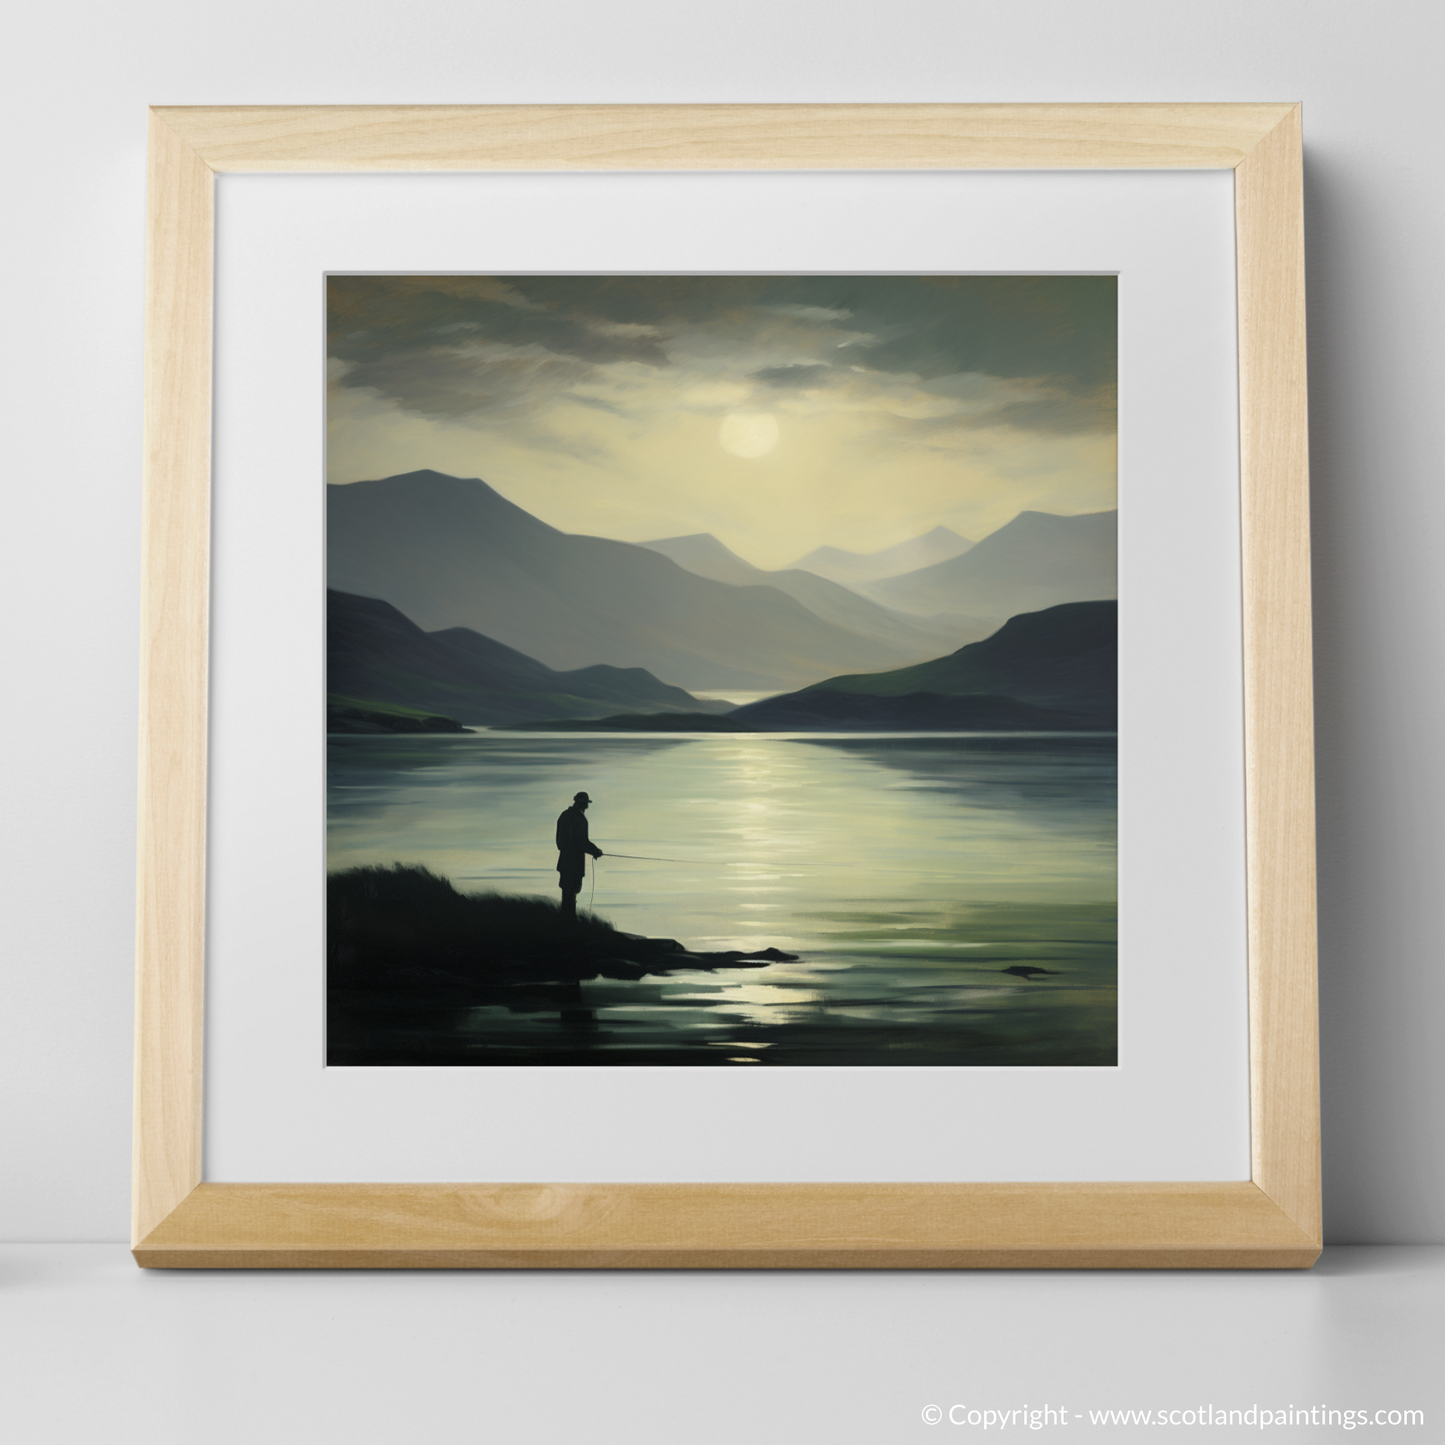 Lone Fisherman at Twilight: A Serene Loch Lomond Vista